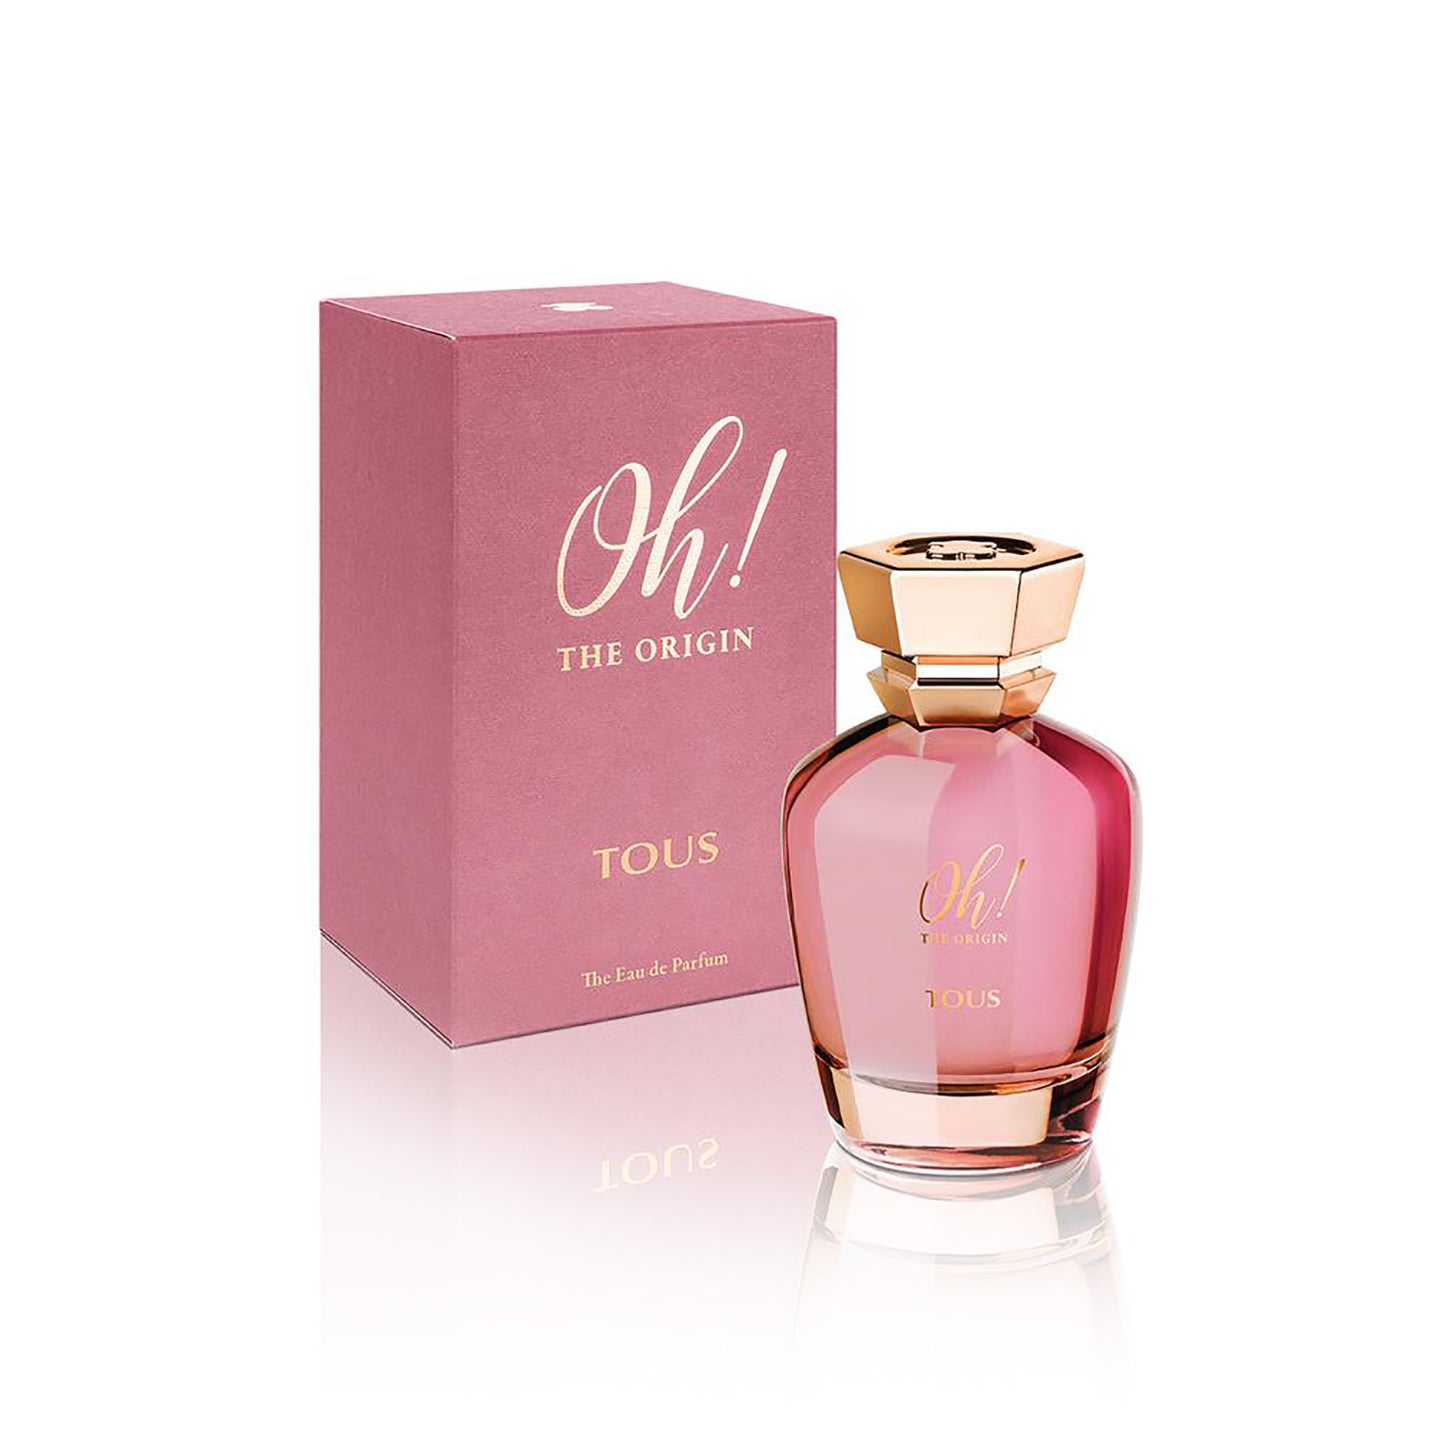 Oh! The Origin 1.5ml Sample Vial - Eau de Parfum